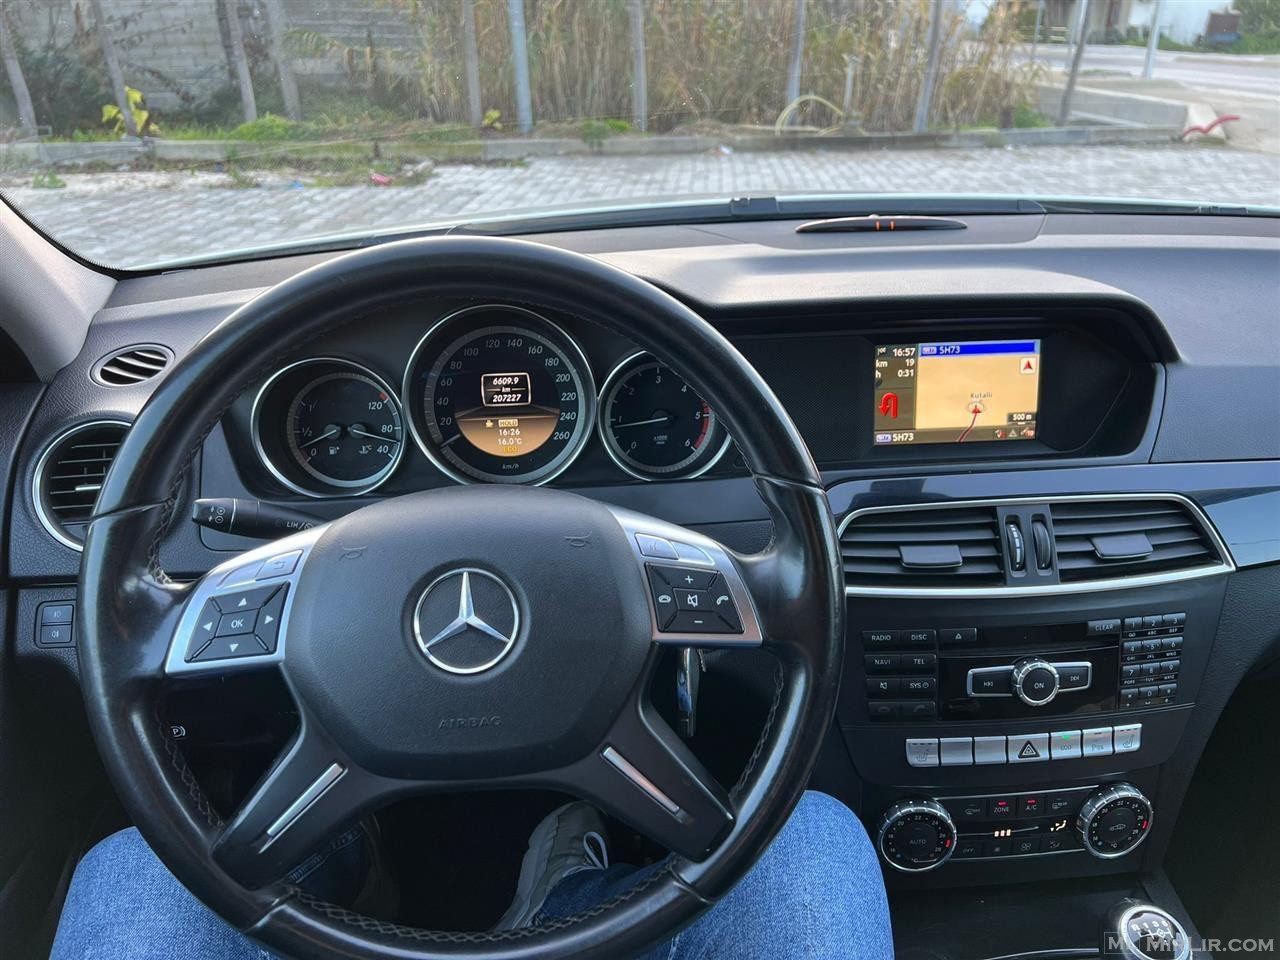 Mercedes Benc c180 